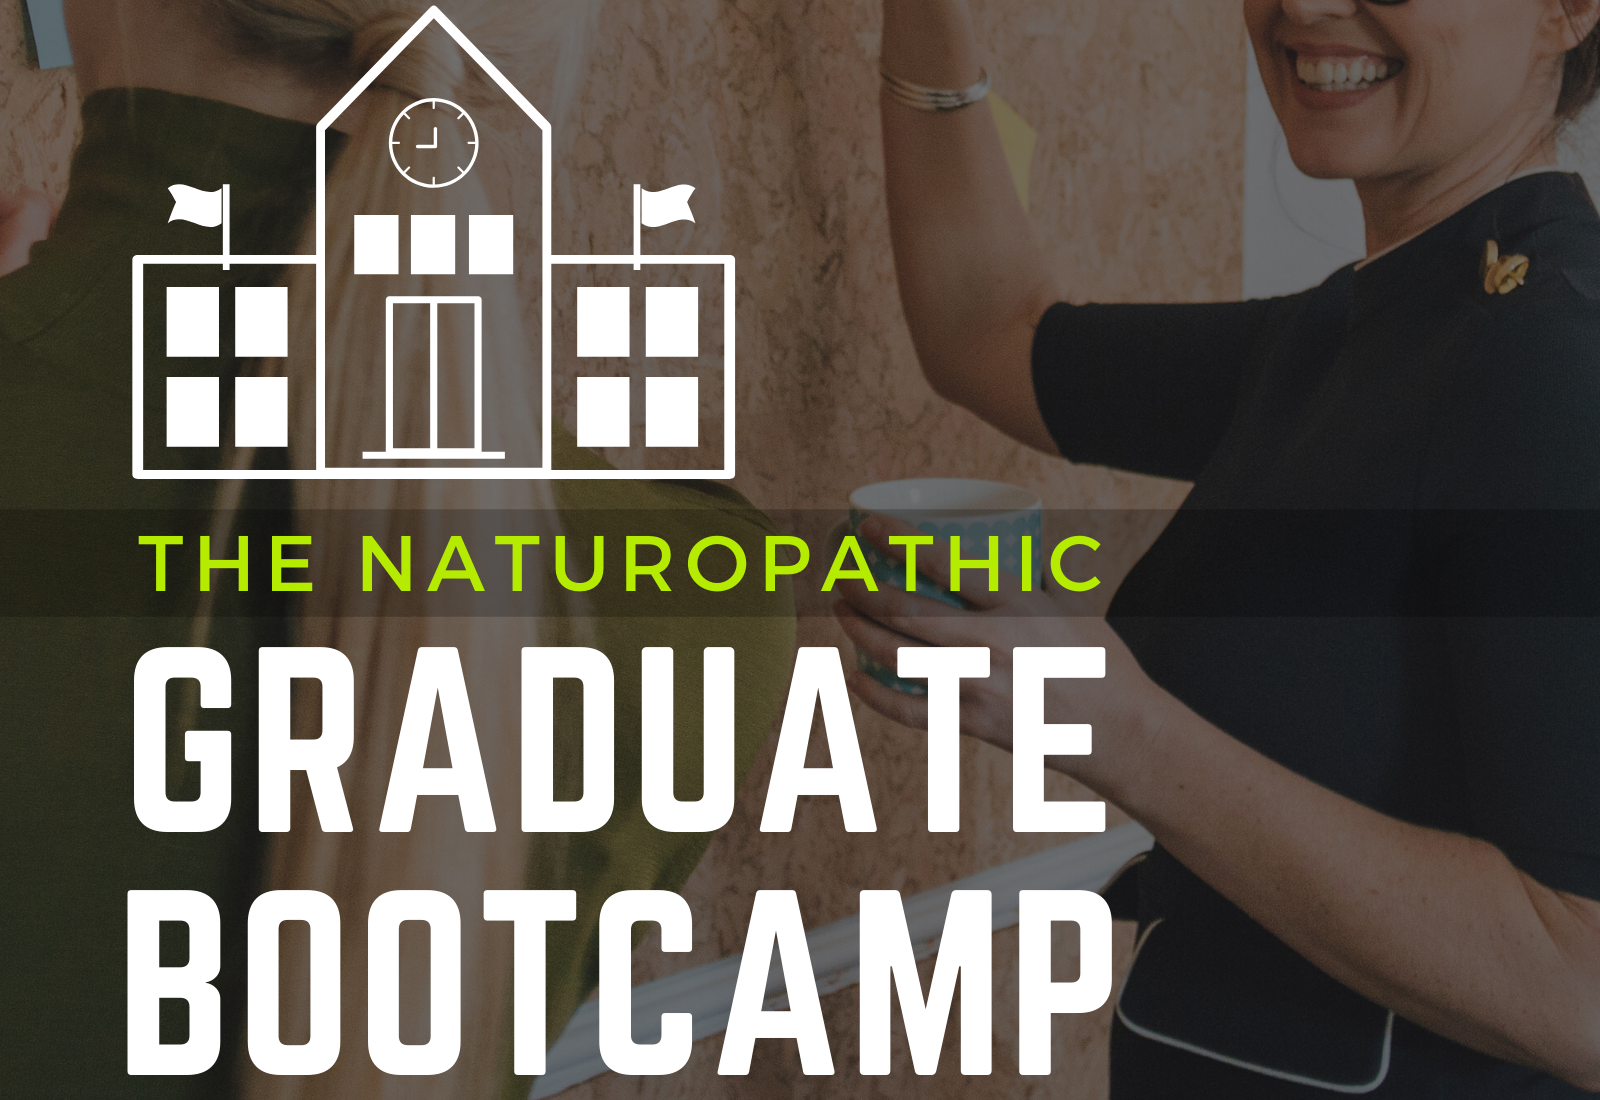 Naturopathic Graduate Bootcamp